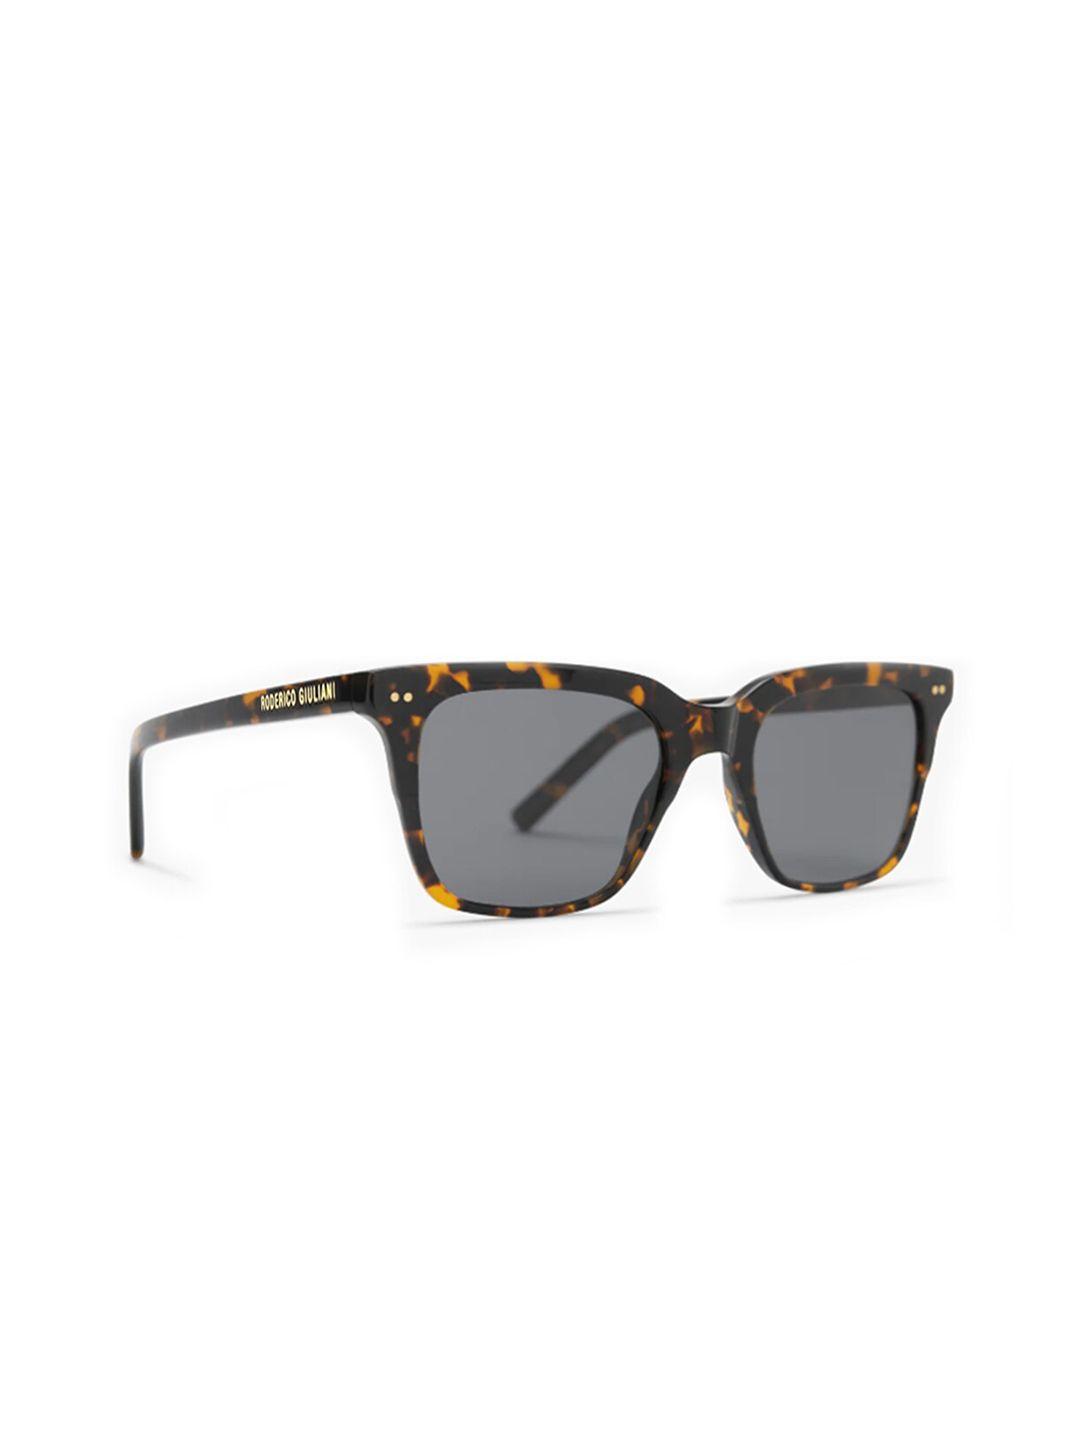 roderico giuliani square sunglasses with polarised & uv protected lens